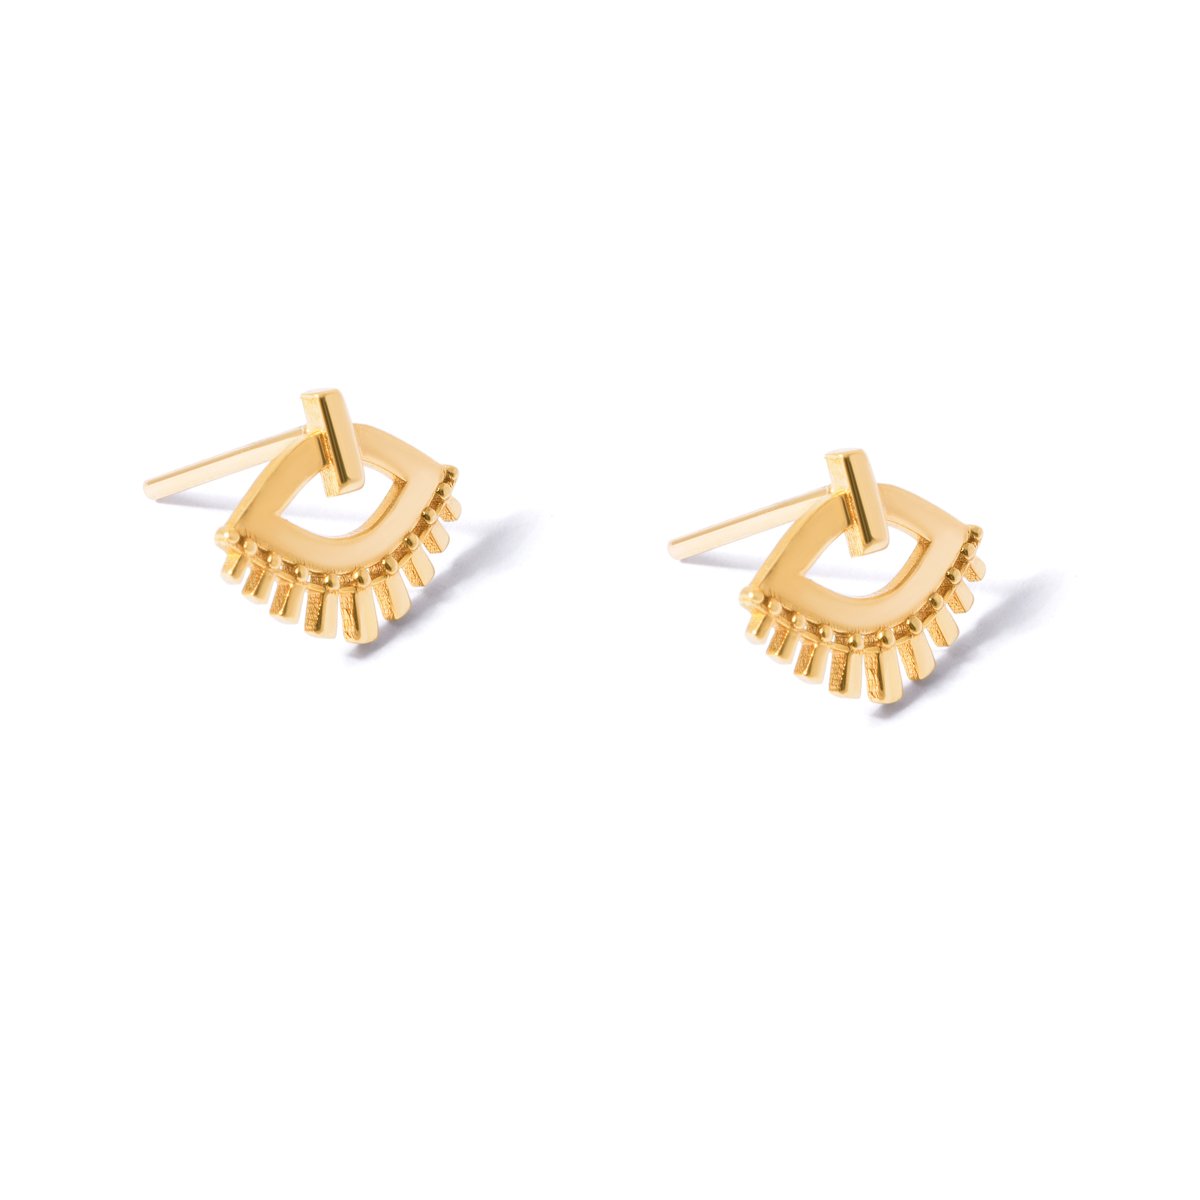 Gold earrings with eyelash charm g